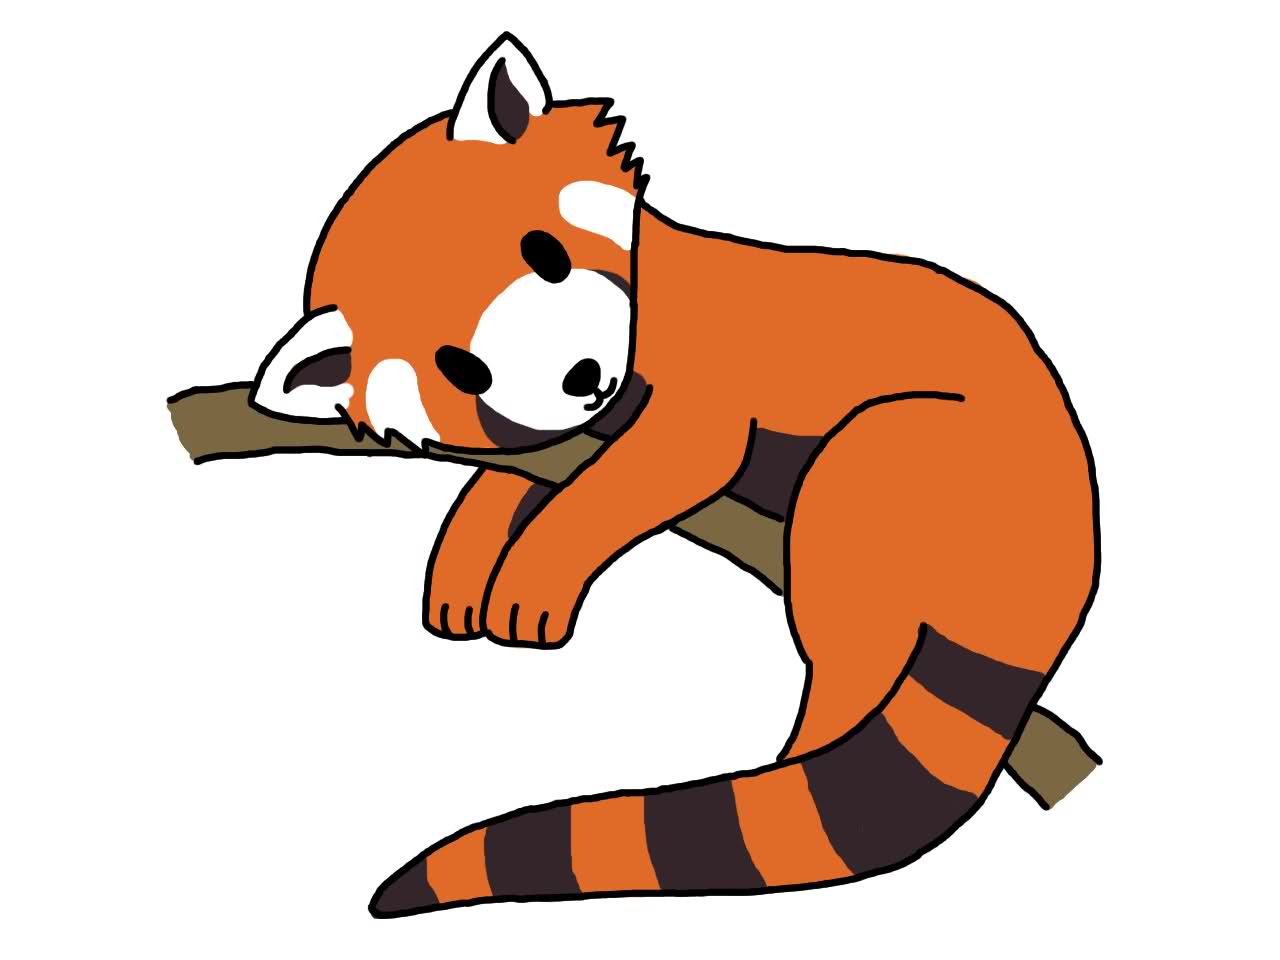 Red Panda Drawing | Clipart Panda - Free Clipart Images